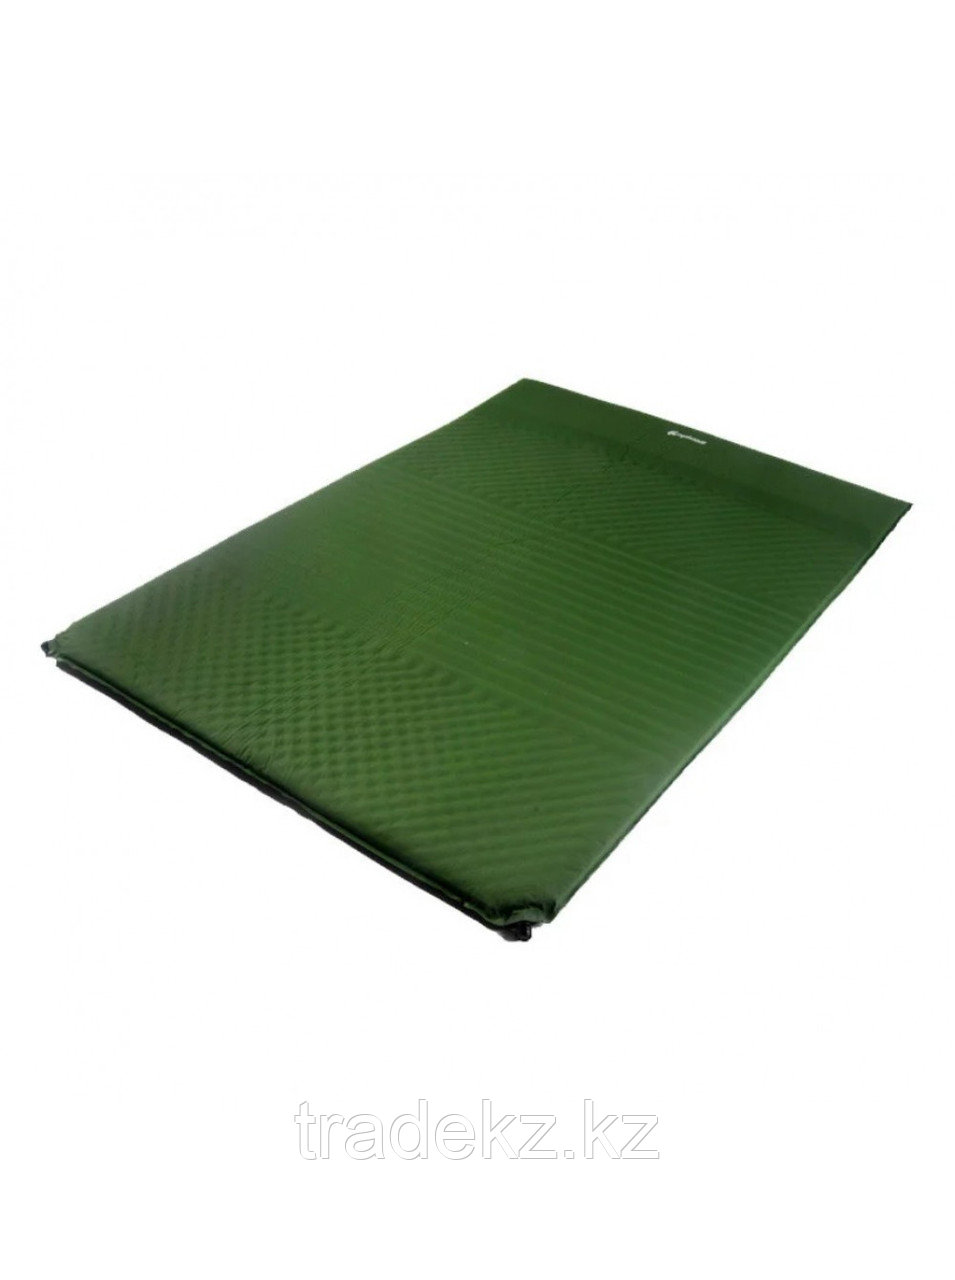 Каремат двухместный самонадувающийся CHANODUG FX-8567-2, цвет зеленый, 184х128х8 см.